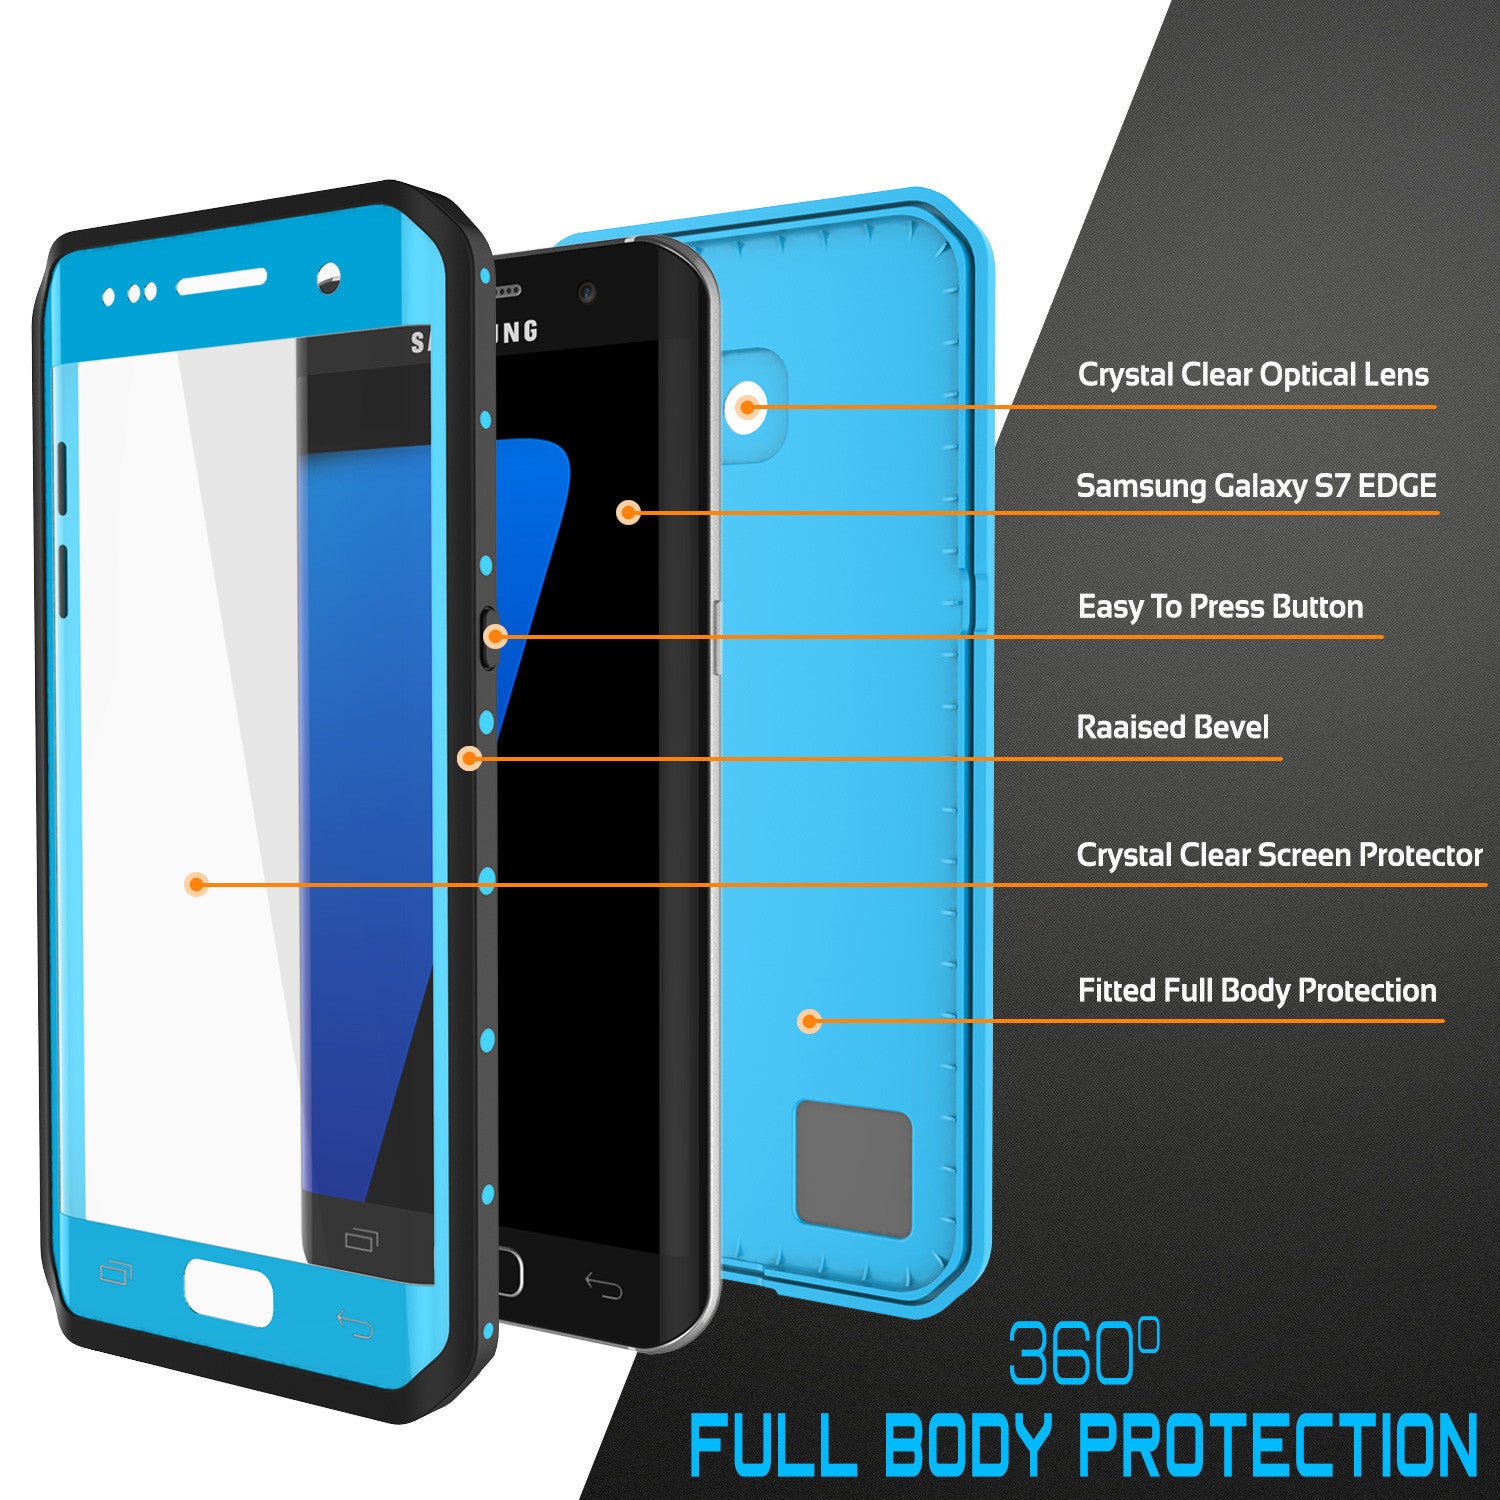 PUNKCASE - Studstar Series Snowproof Case for Galaxy S7 Edge | Light Blue